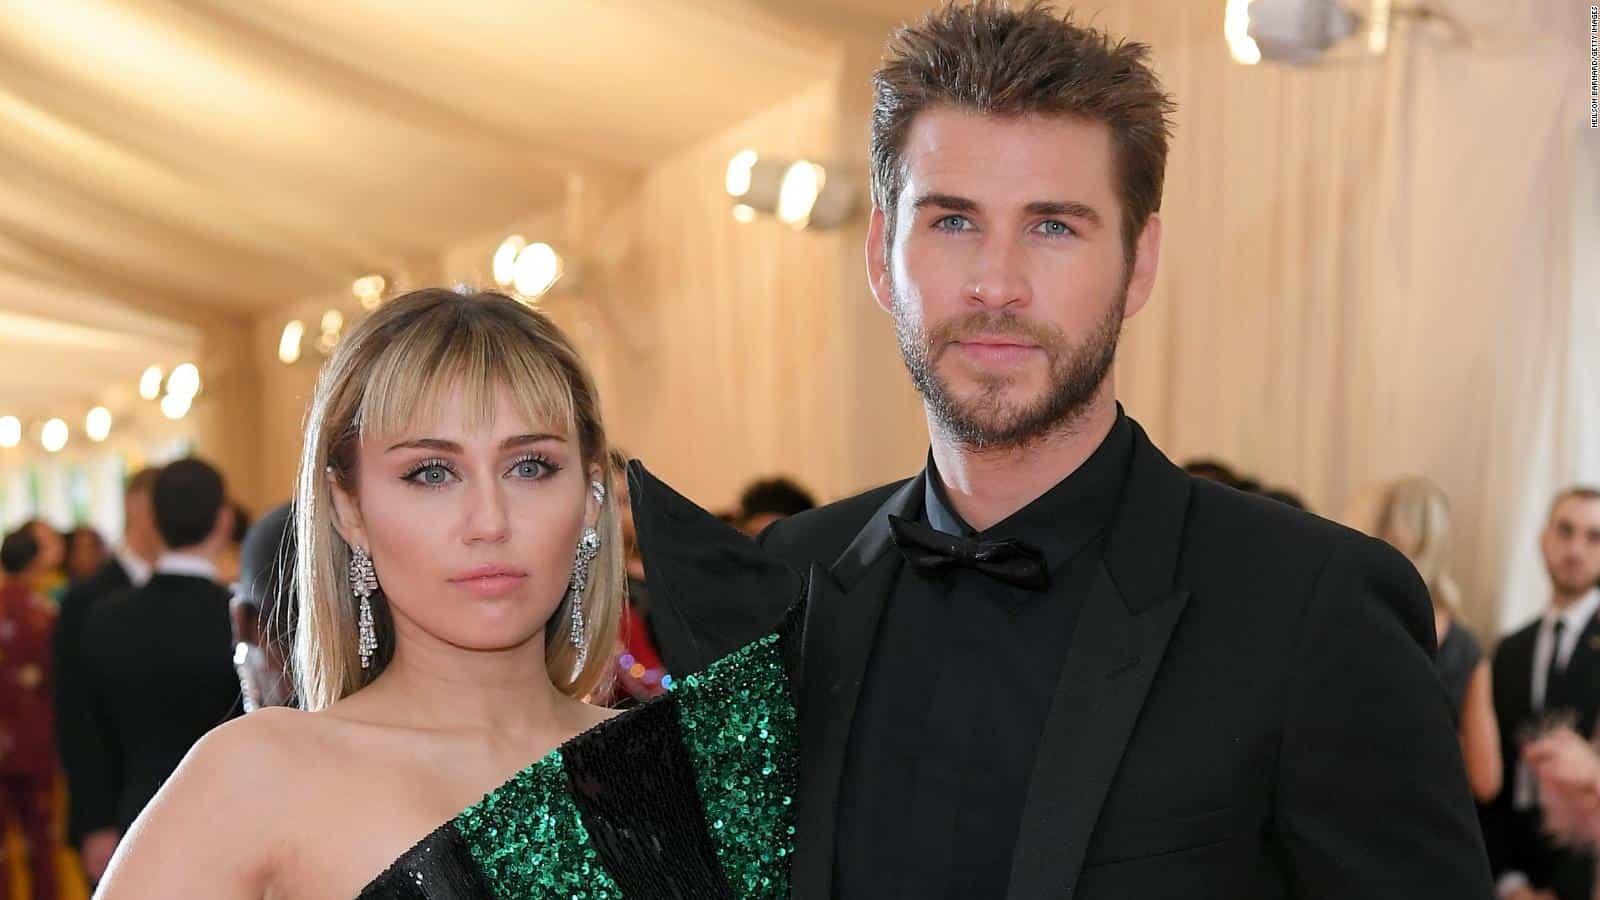 Miley Cyrus e Liam Hemsworth